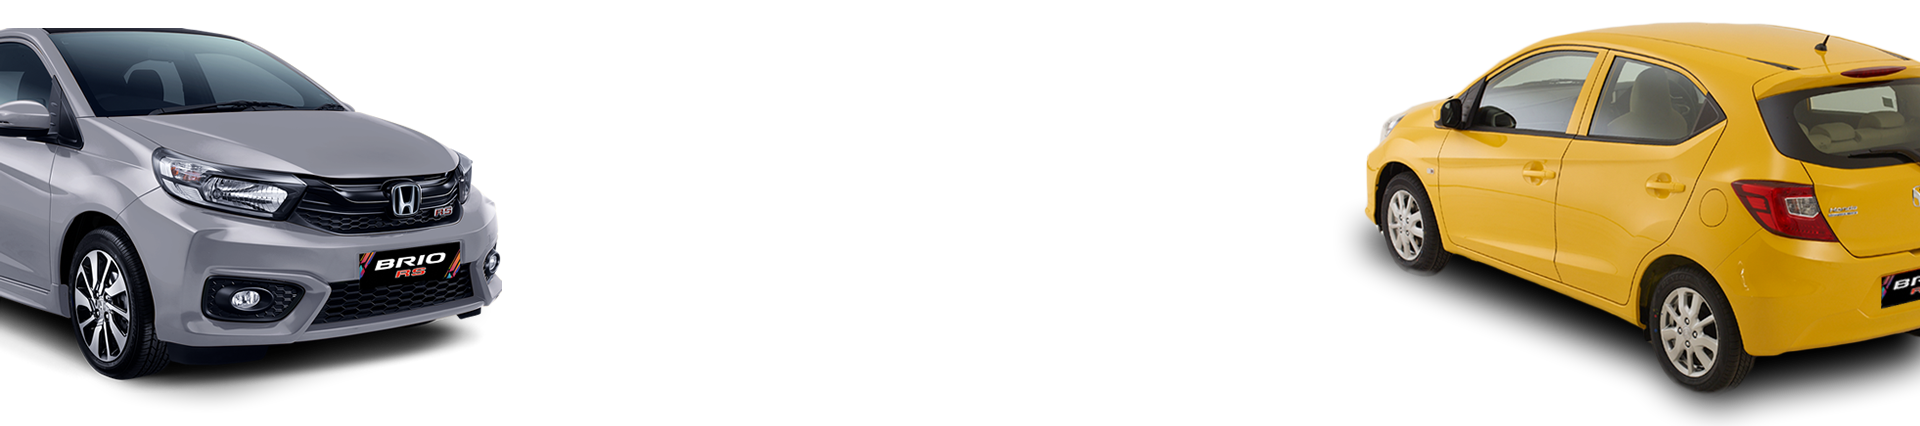 brio-world-logo-witg-bg-pattern